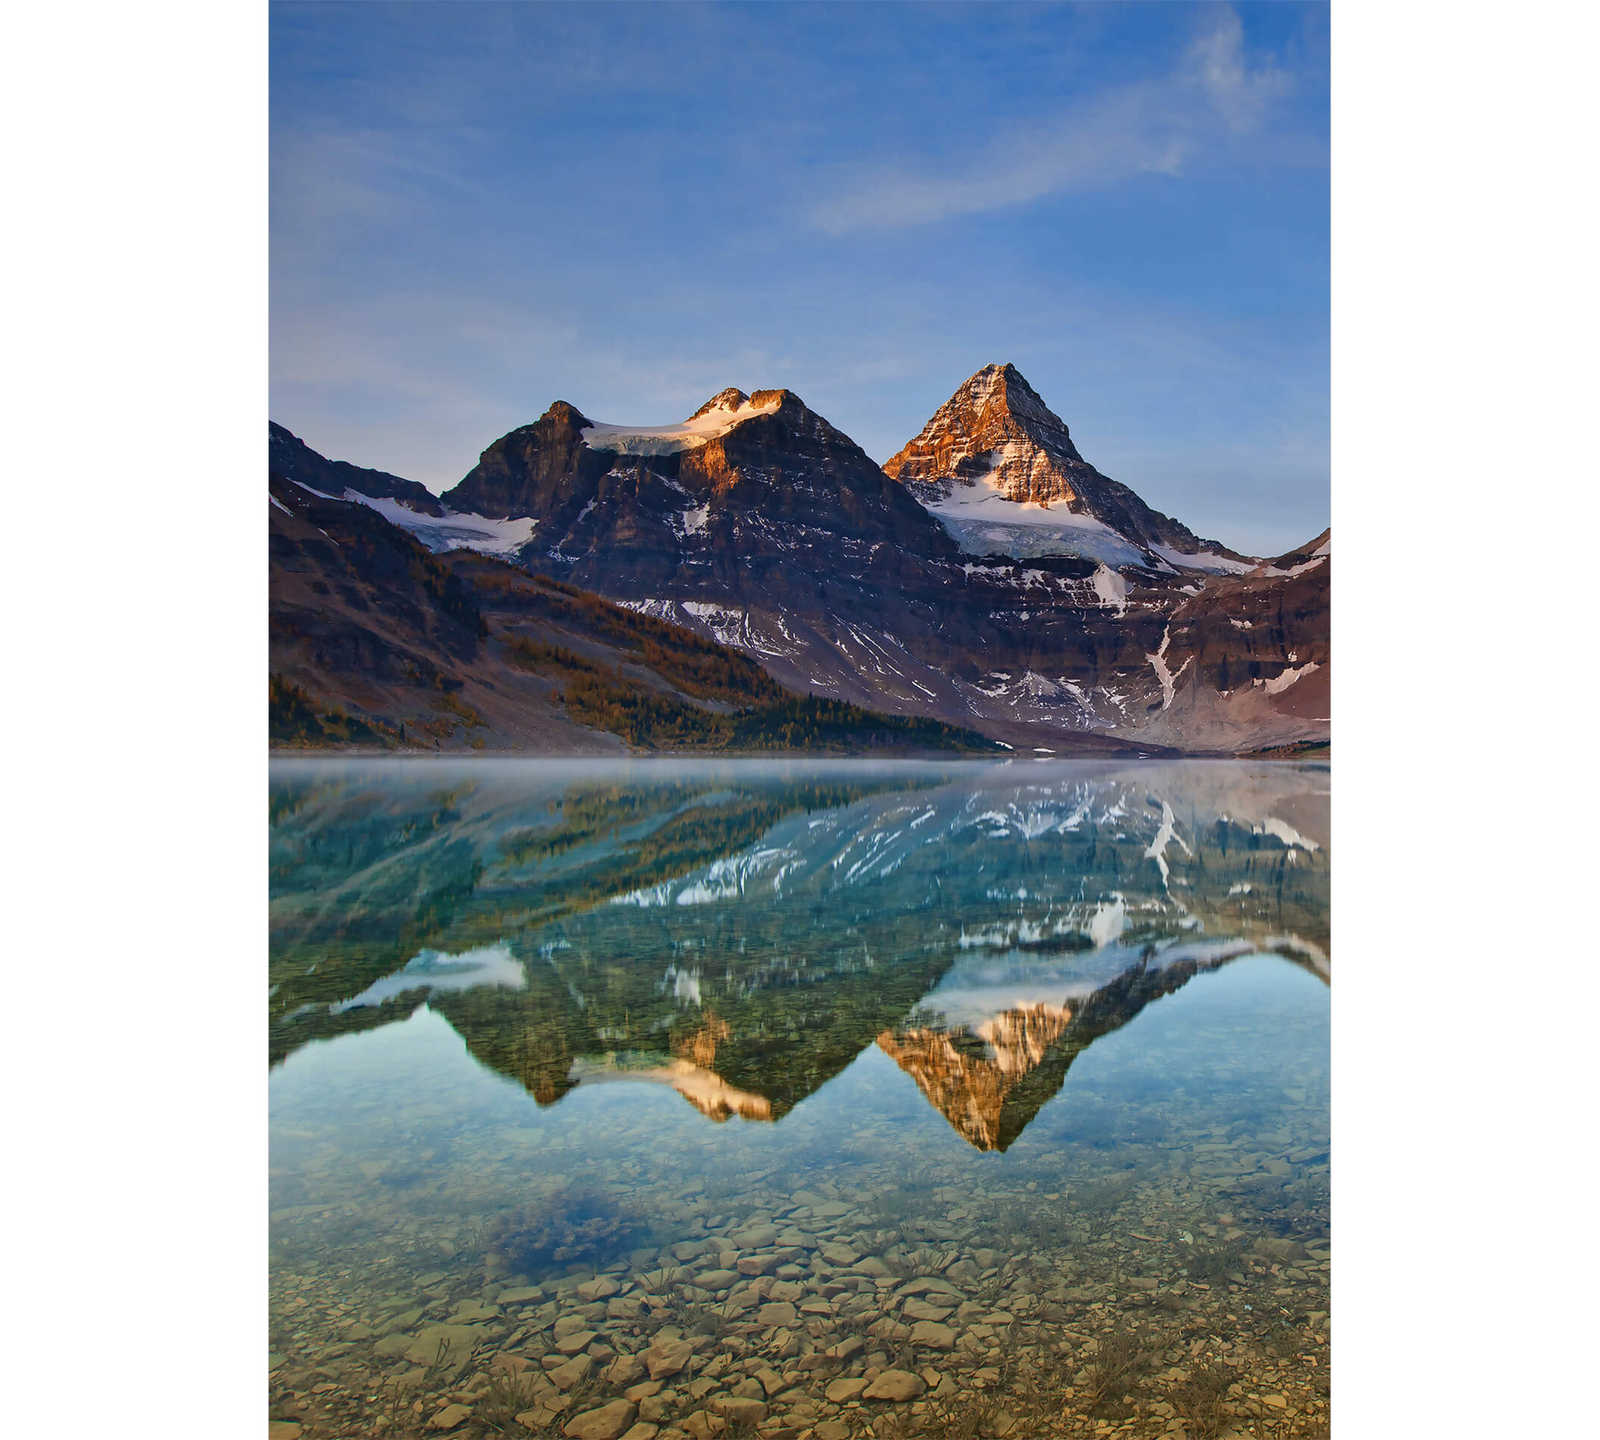 Lago e montagne in Canada Carta da parati - Marrone, blu, bianco
